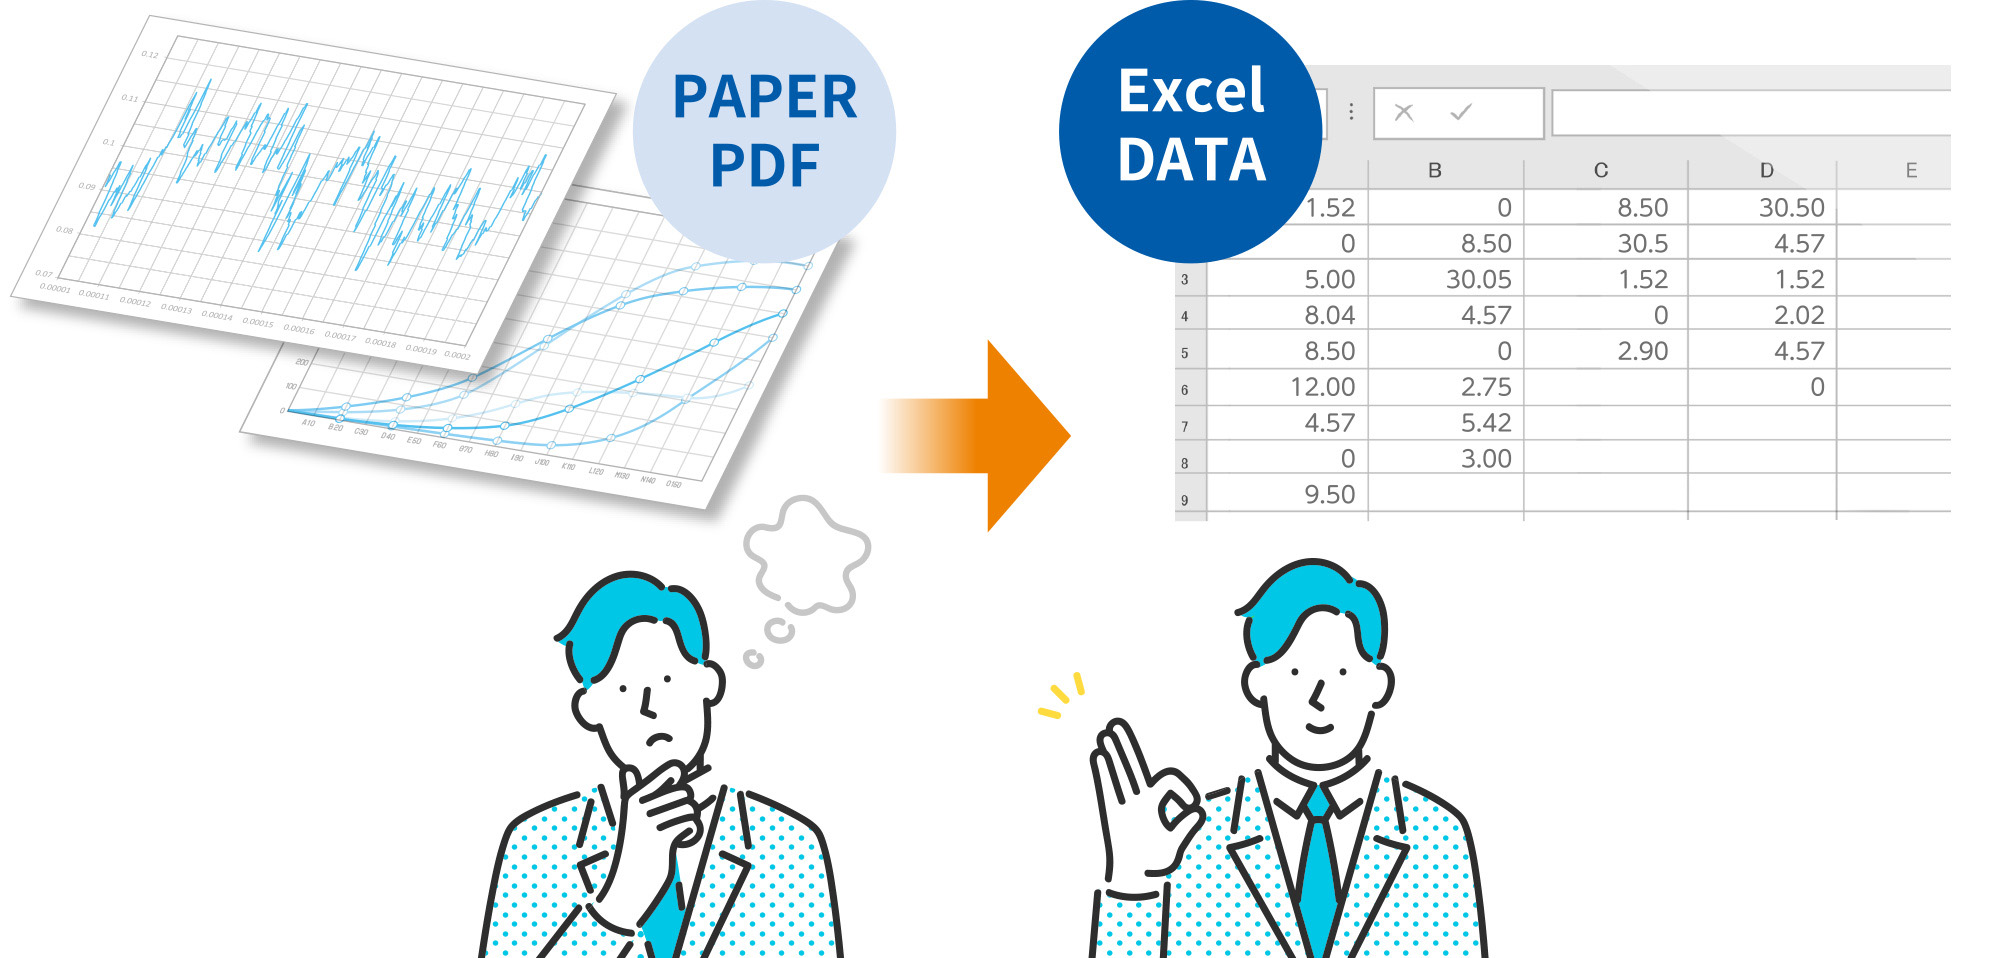 PAPER PDF Excel DATA